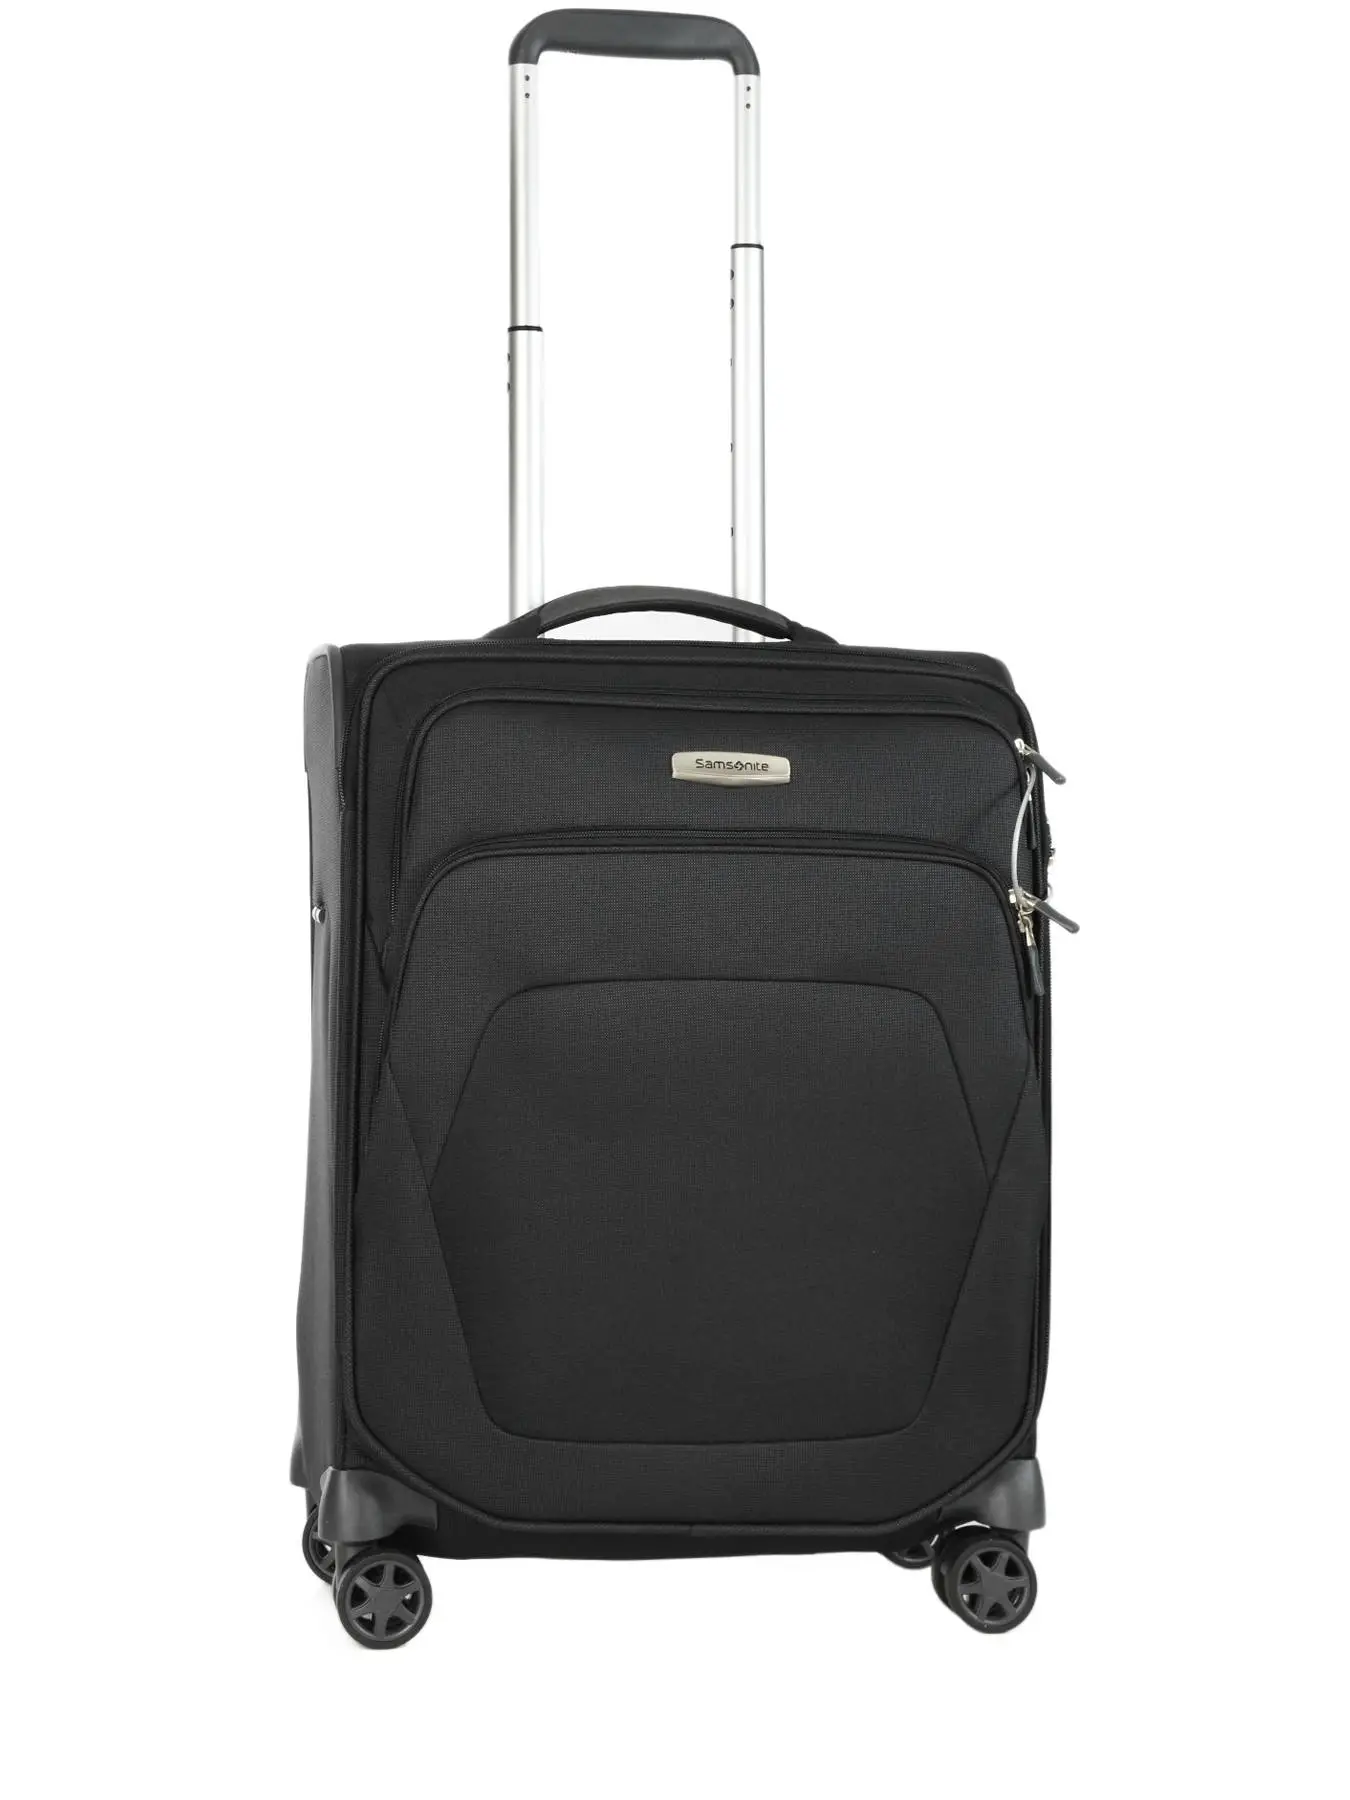 Samsonite Carry-on-suitcase 87552 / 65N.004 on edisac.com